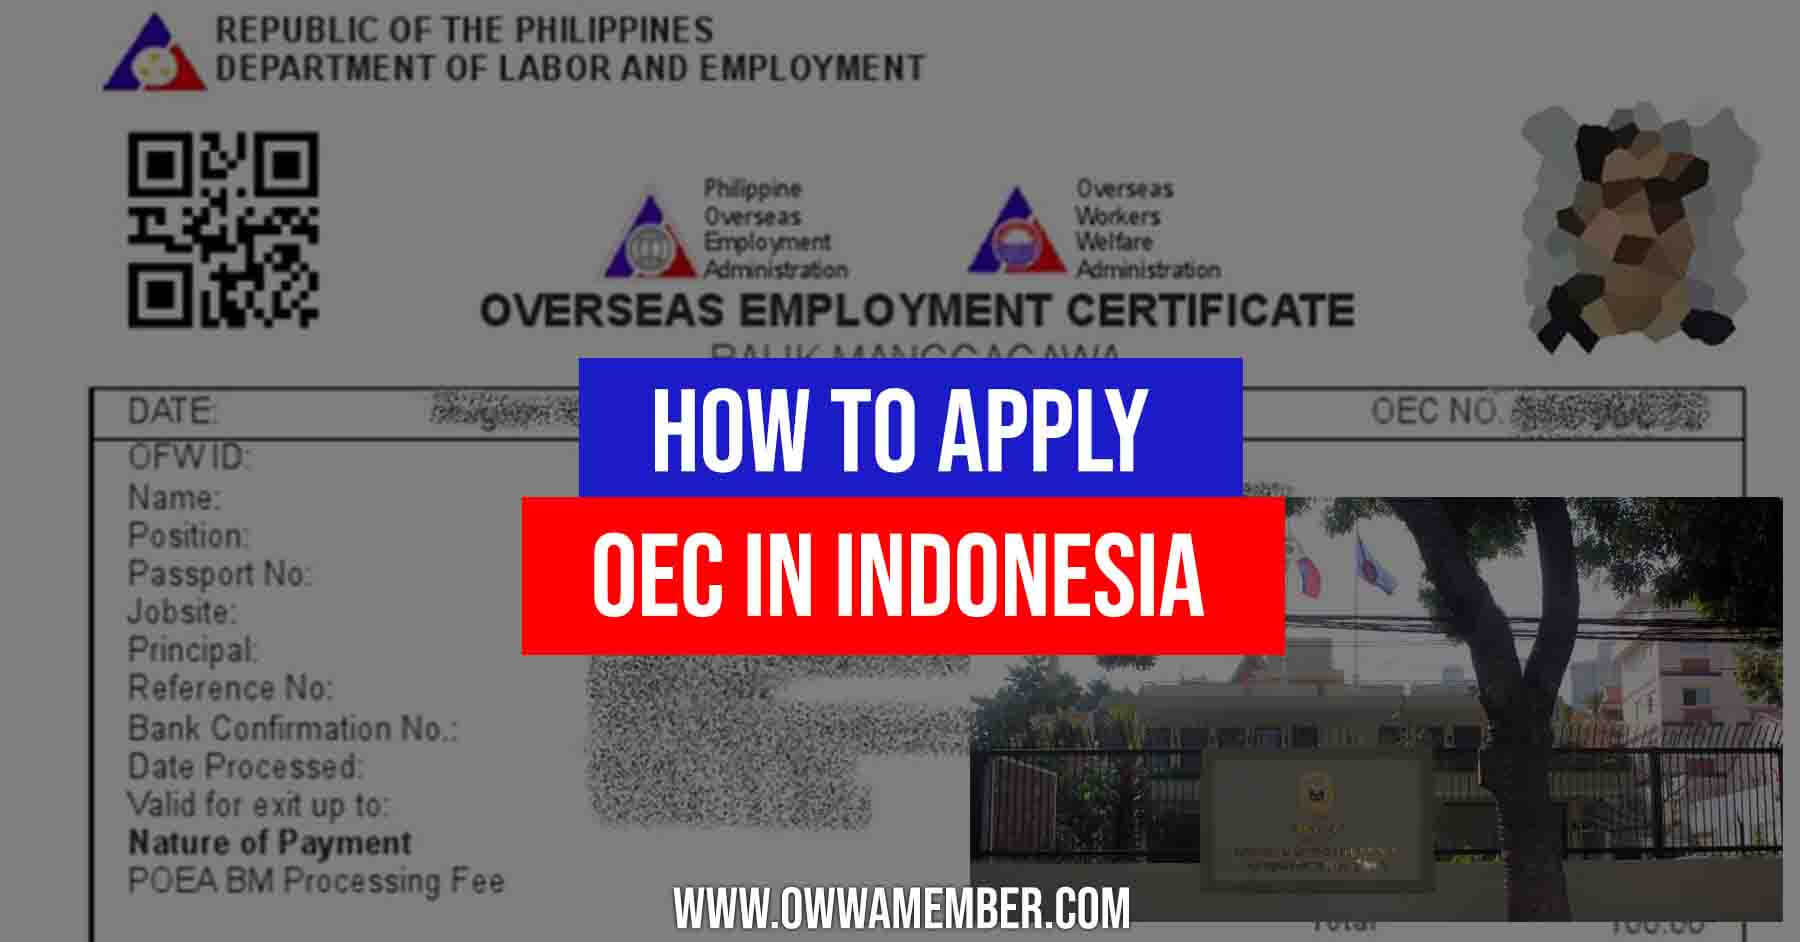 how to apply oec certificate balik manggagawa in indonesia